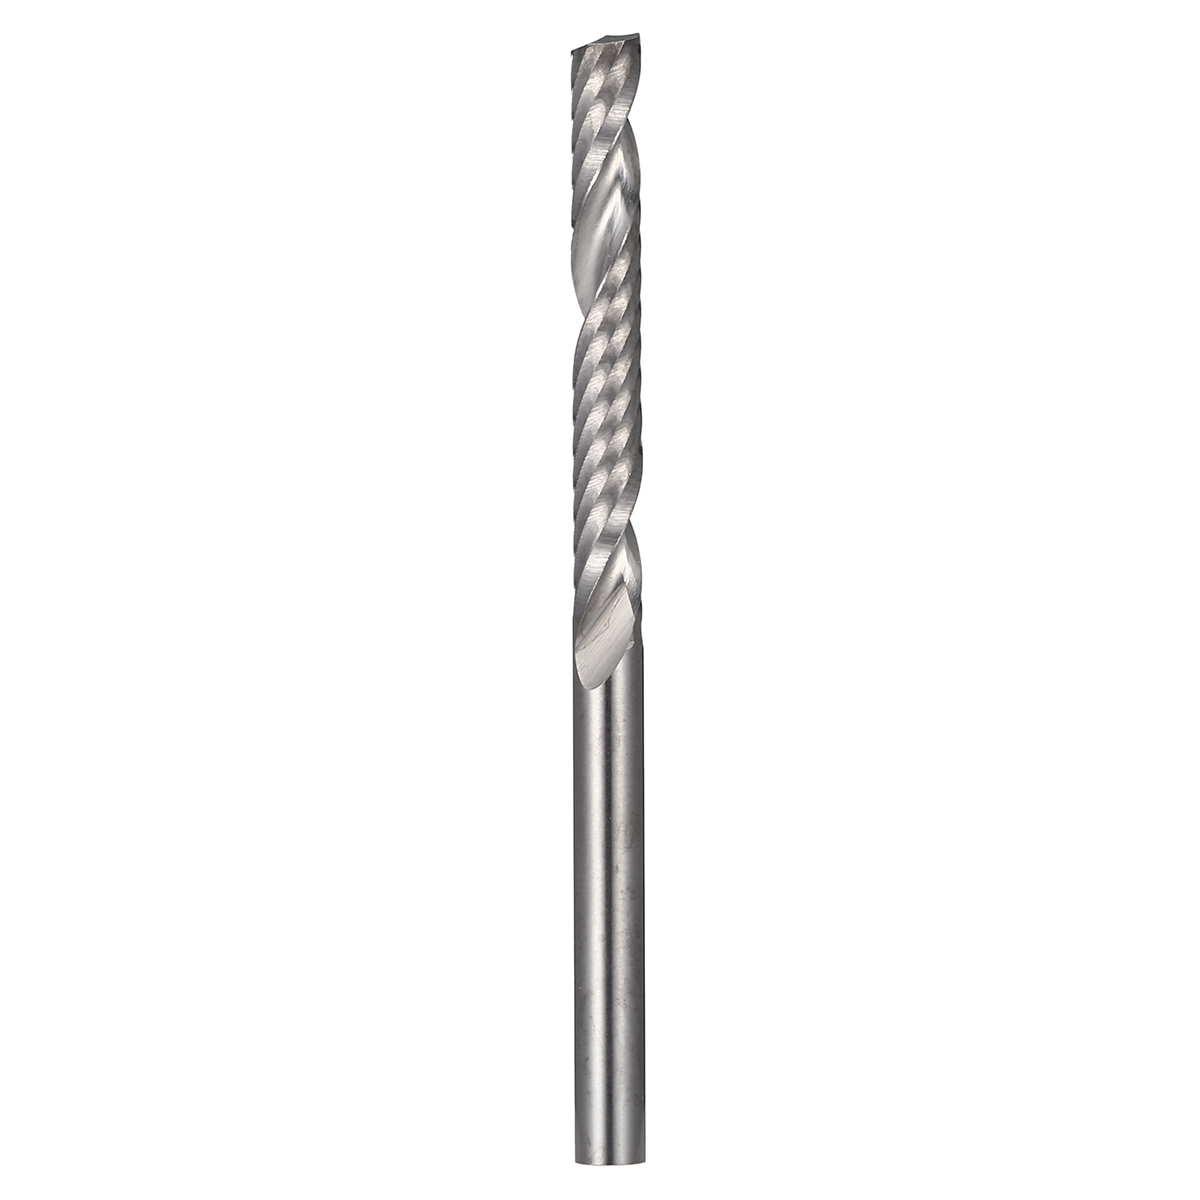 Drillpro-DB-M7-10pcs-18-Inch-Shank-End-Mill-Cutter-1-Flute-Carbide-Spiral-Milling-Cutter-1033261-6